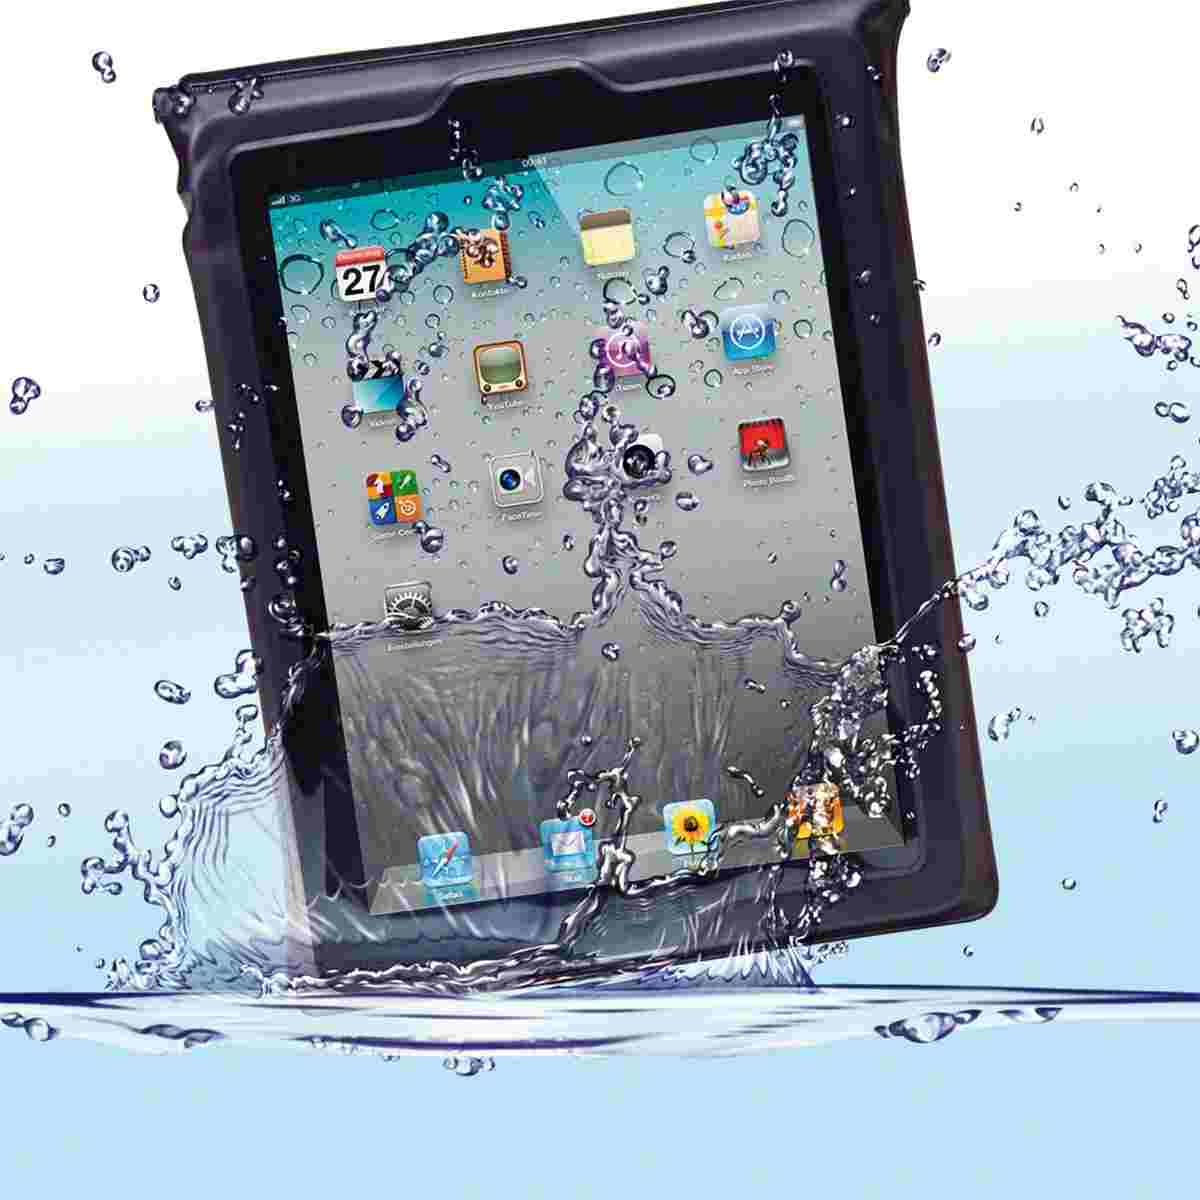 DiCAPac WP-i20 Underwater Bag for iPad & iPad 2